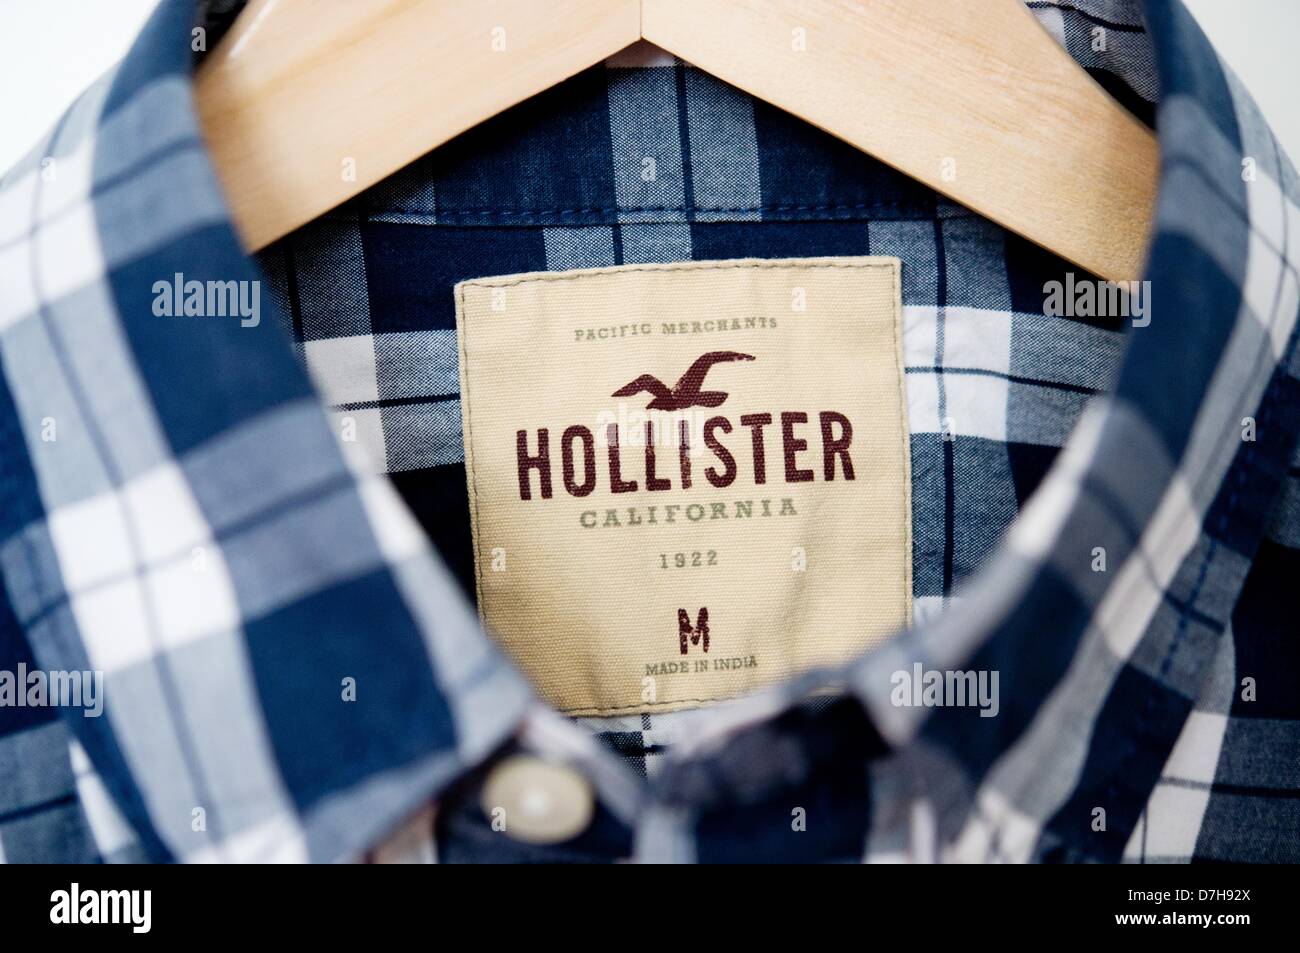 hollister shirts online shopping india